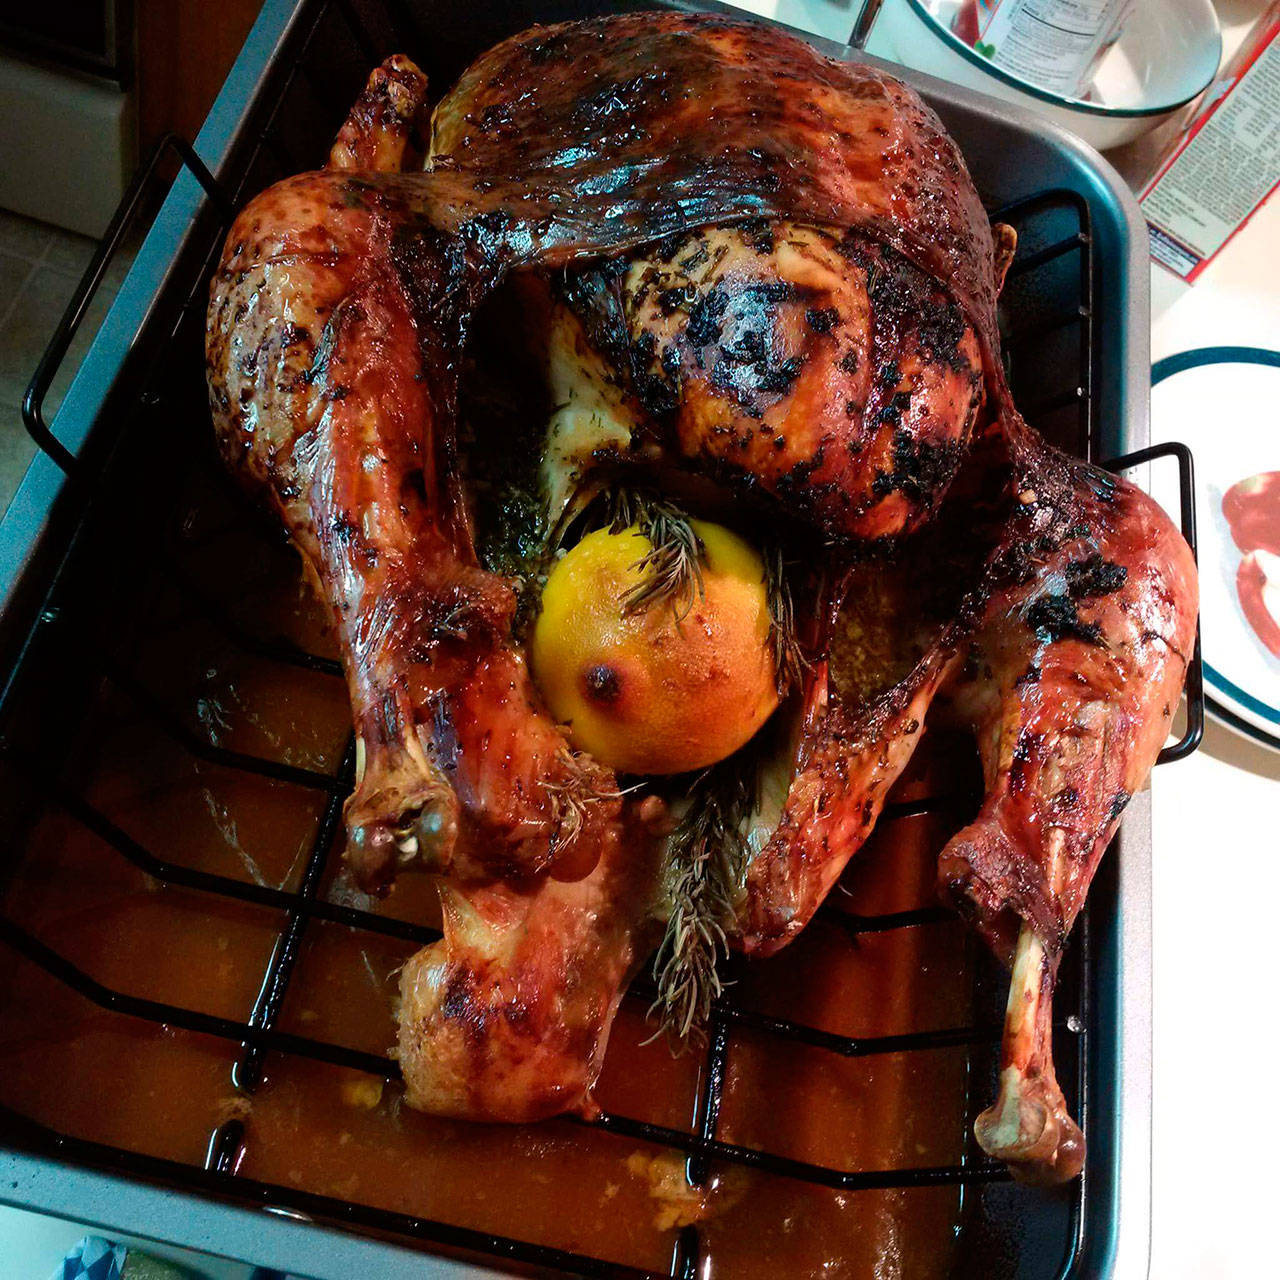 Martha Stewart’s turkey awaits eating in November 2017. (Emily Hanson/Peninsula Daily News)